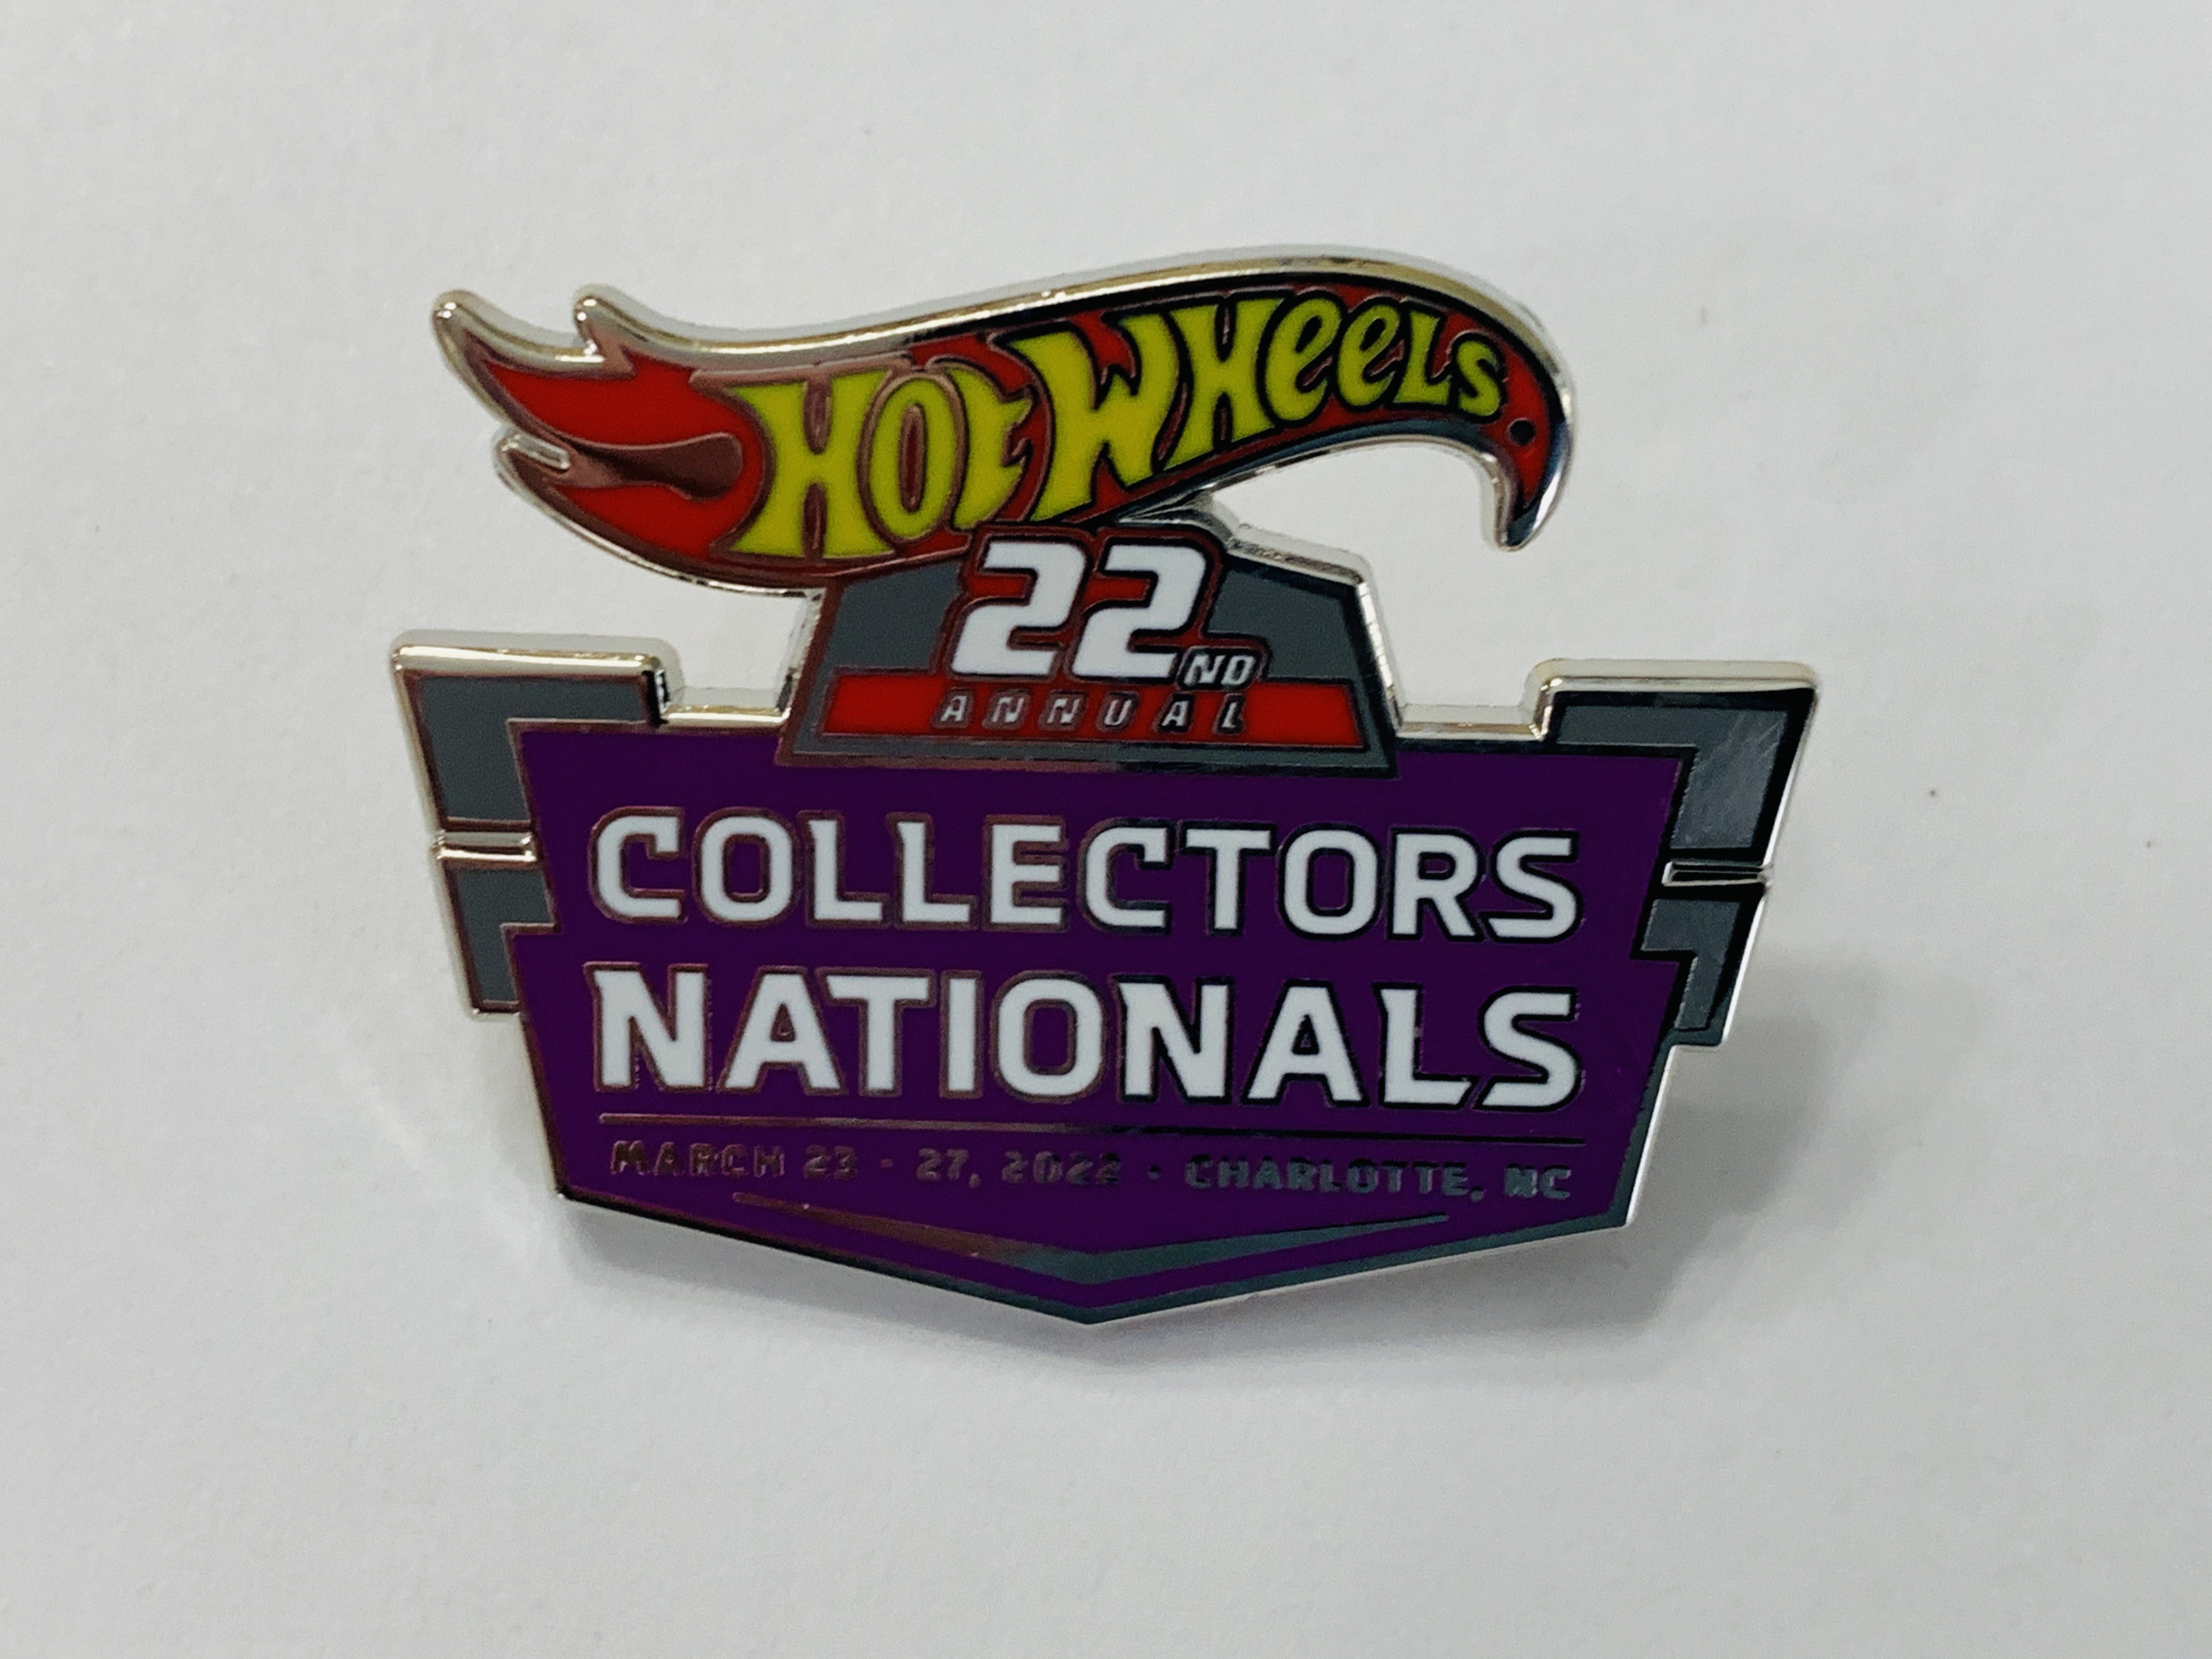 Hot Wheels 2022 Charlotte Collectors Nationals Pin